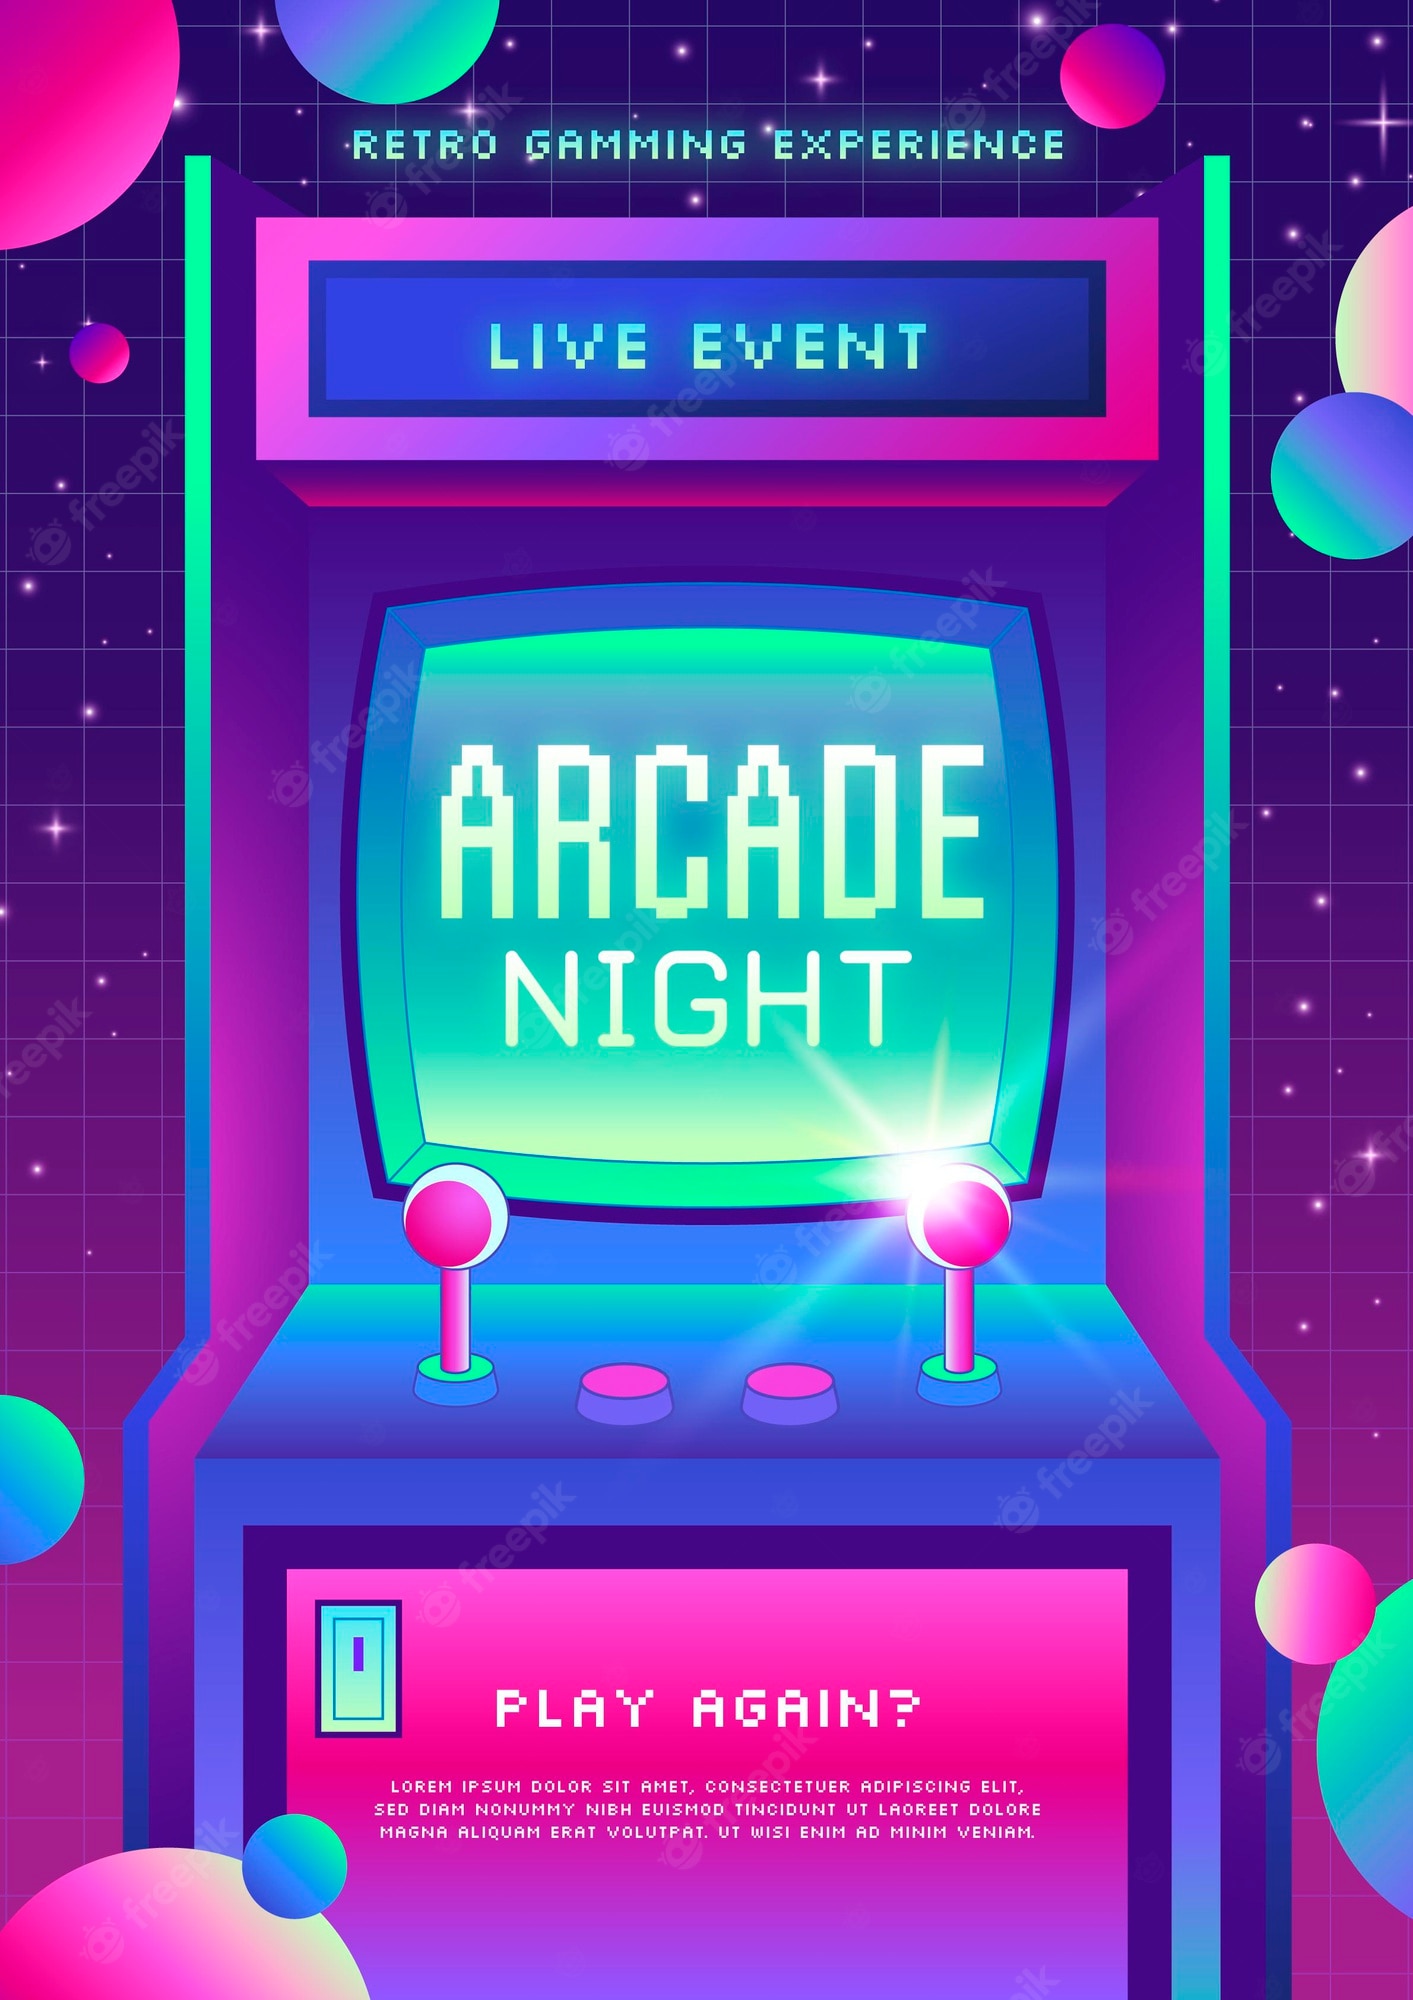 Retro Arcade Background